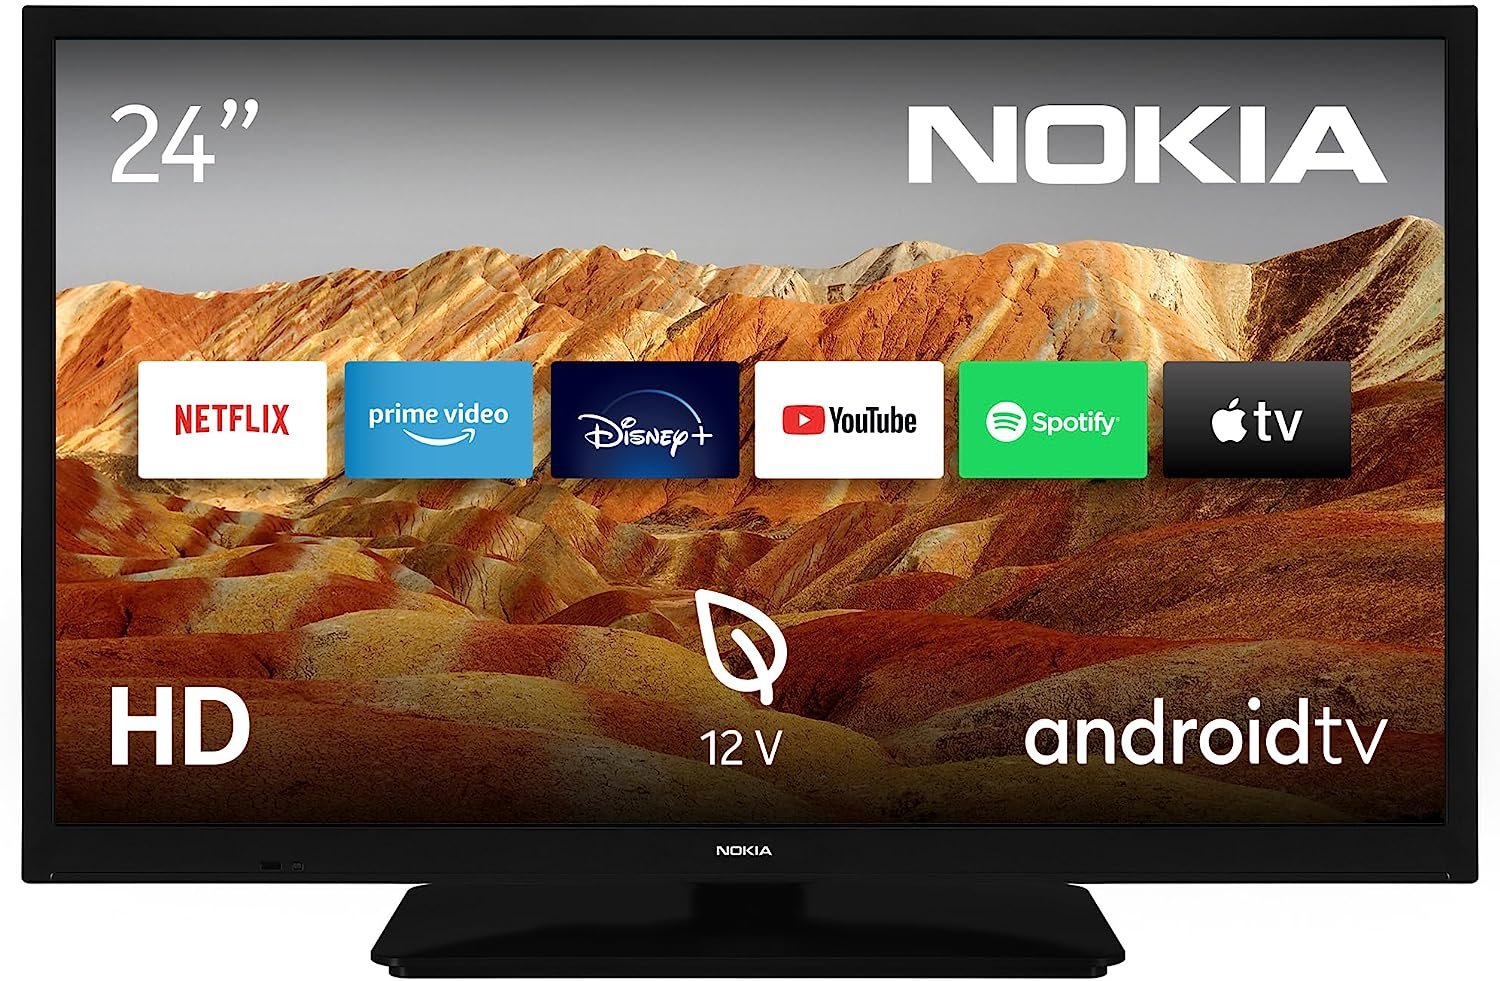 Nokia se suma a la fiesta con este televisor 12V con Android TV de 24 pulgadas